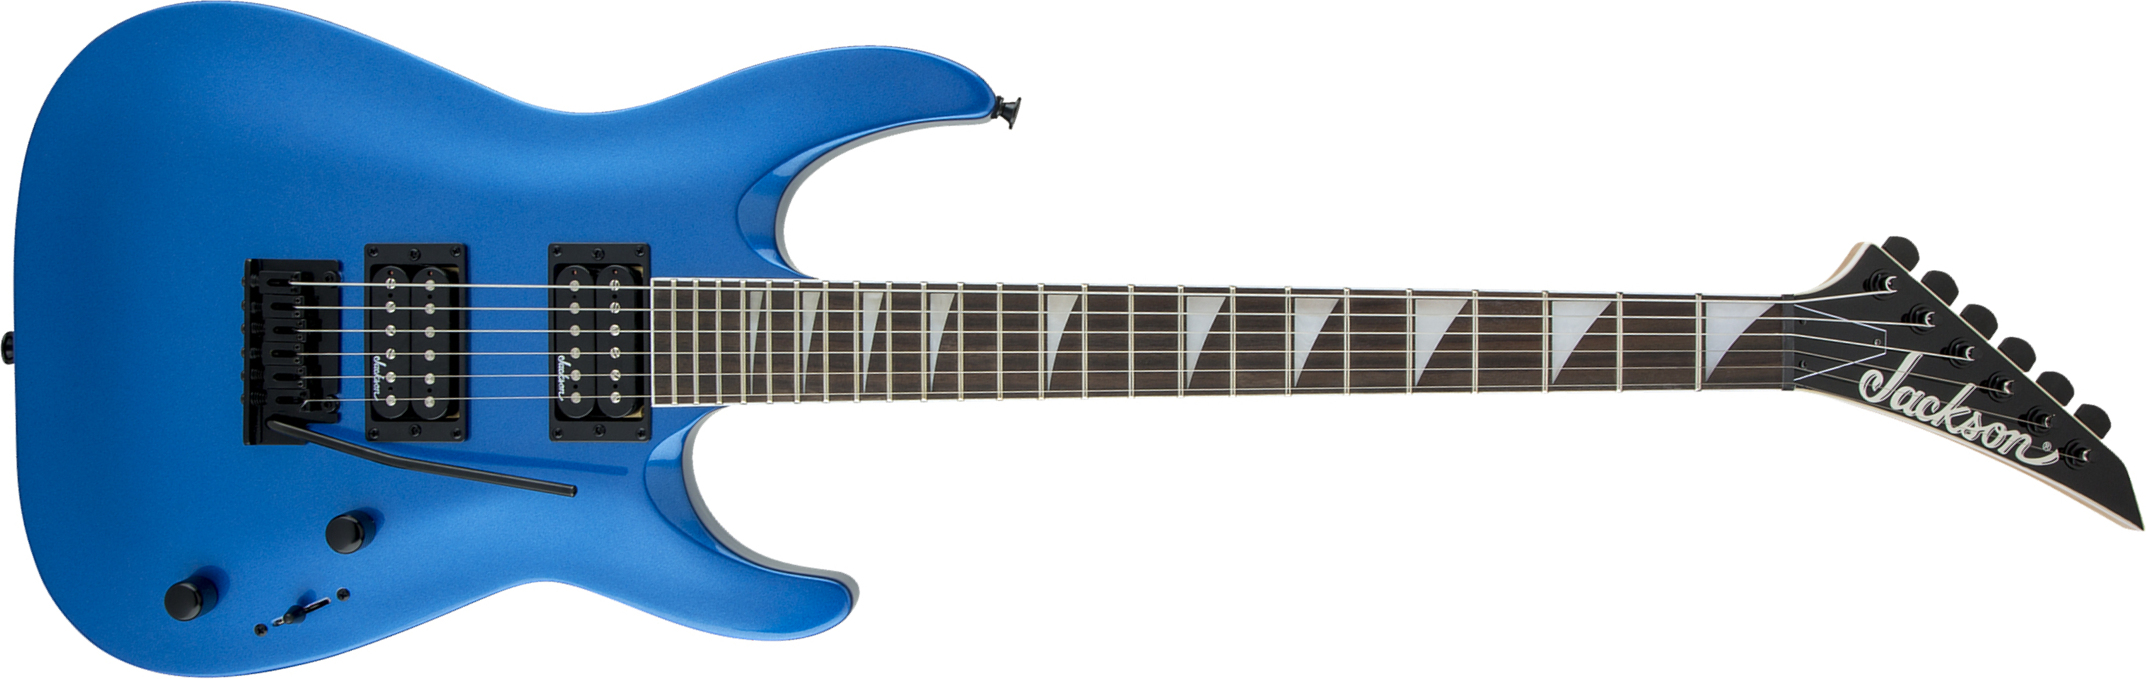 Jackson Dinky Arch Top Dka Js22 2h Trem Ama - Metallic Blue - Metal electric guitar - Main picture